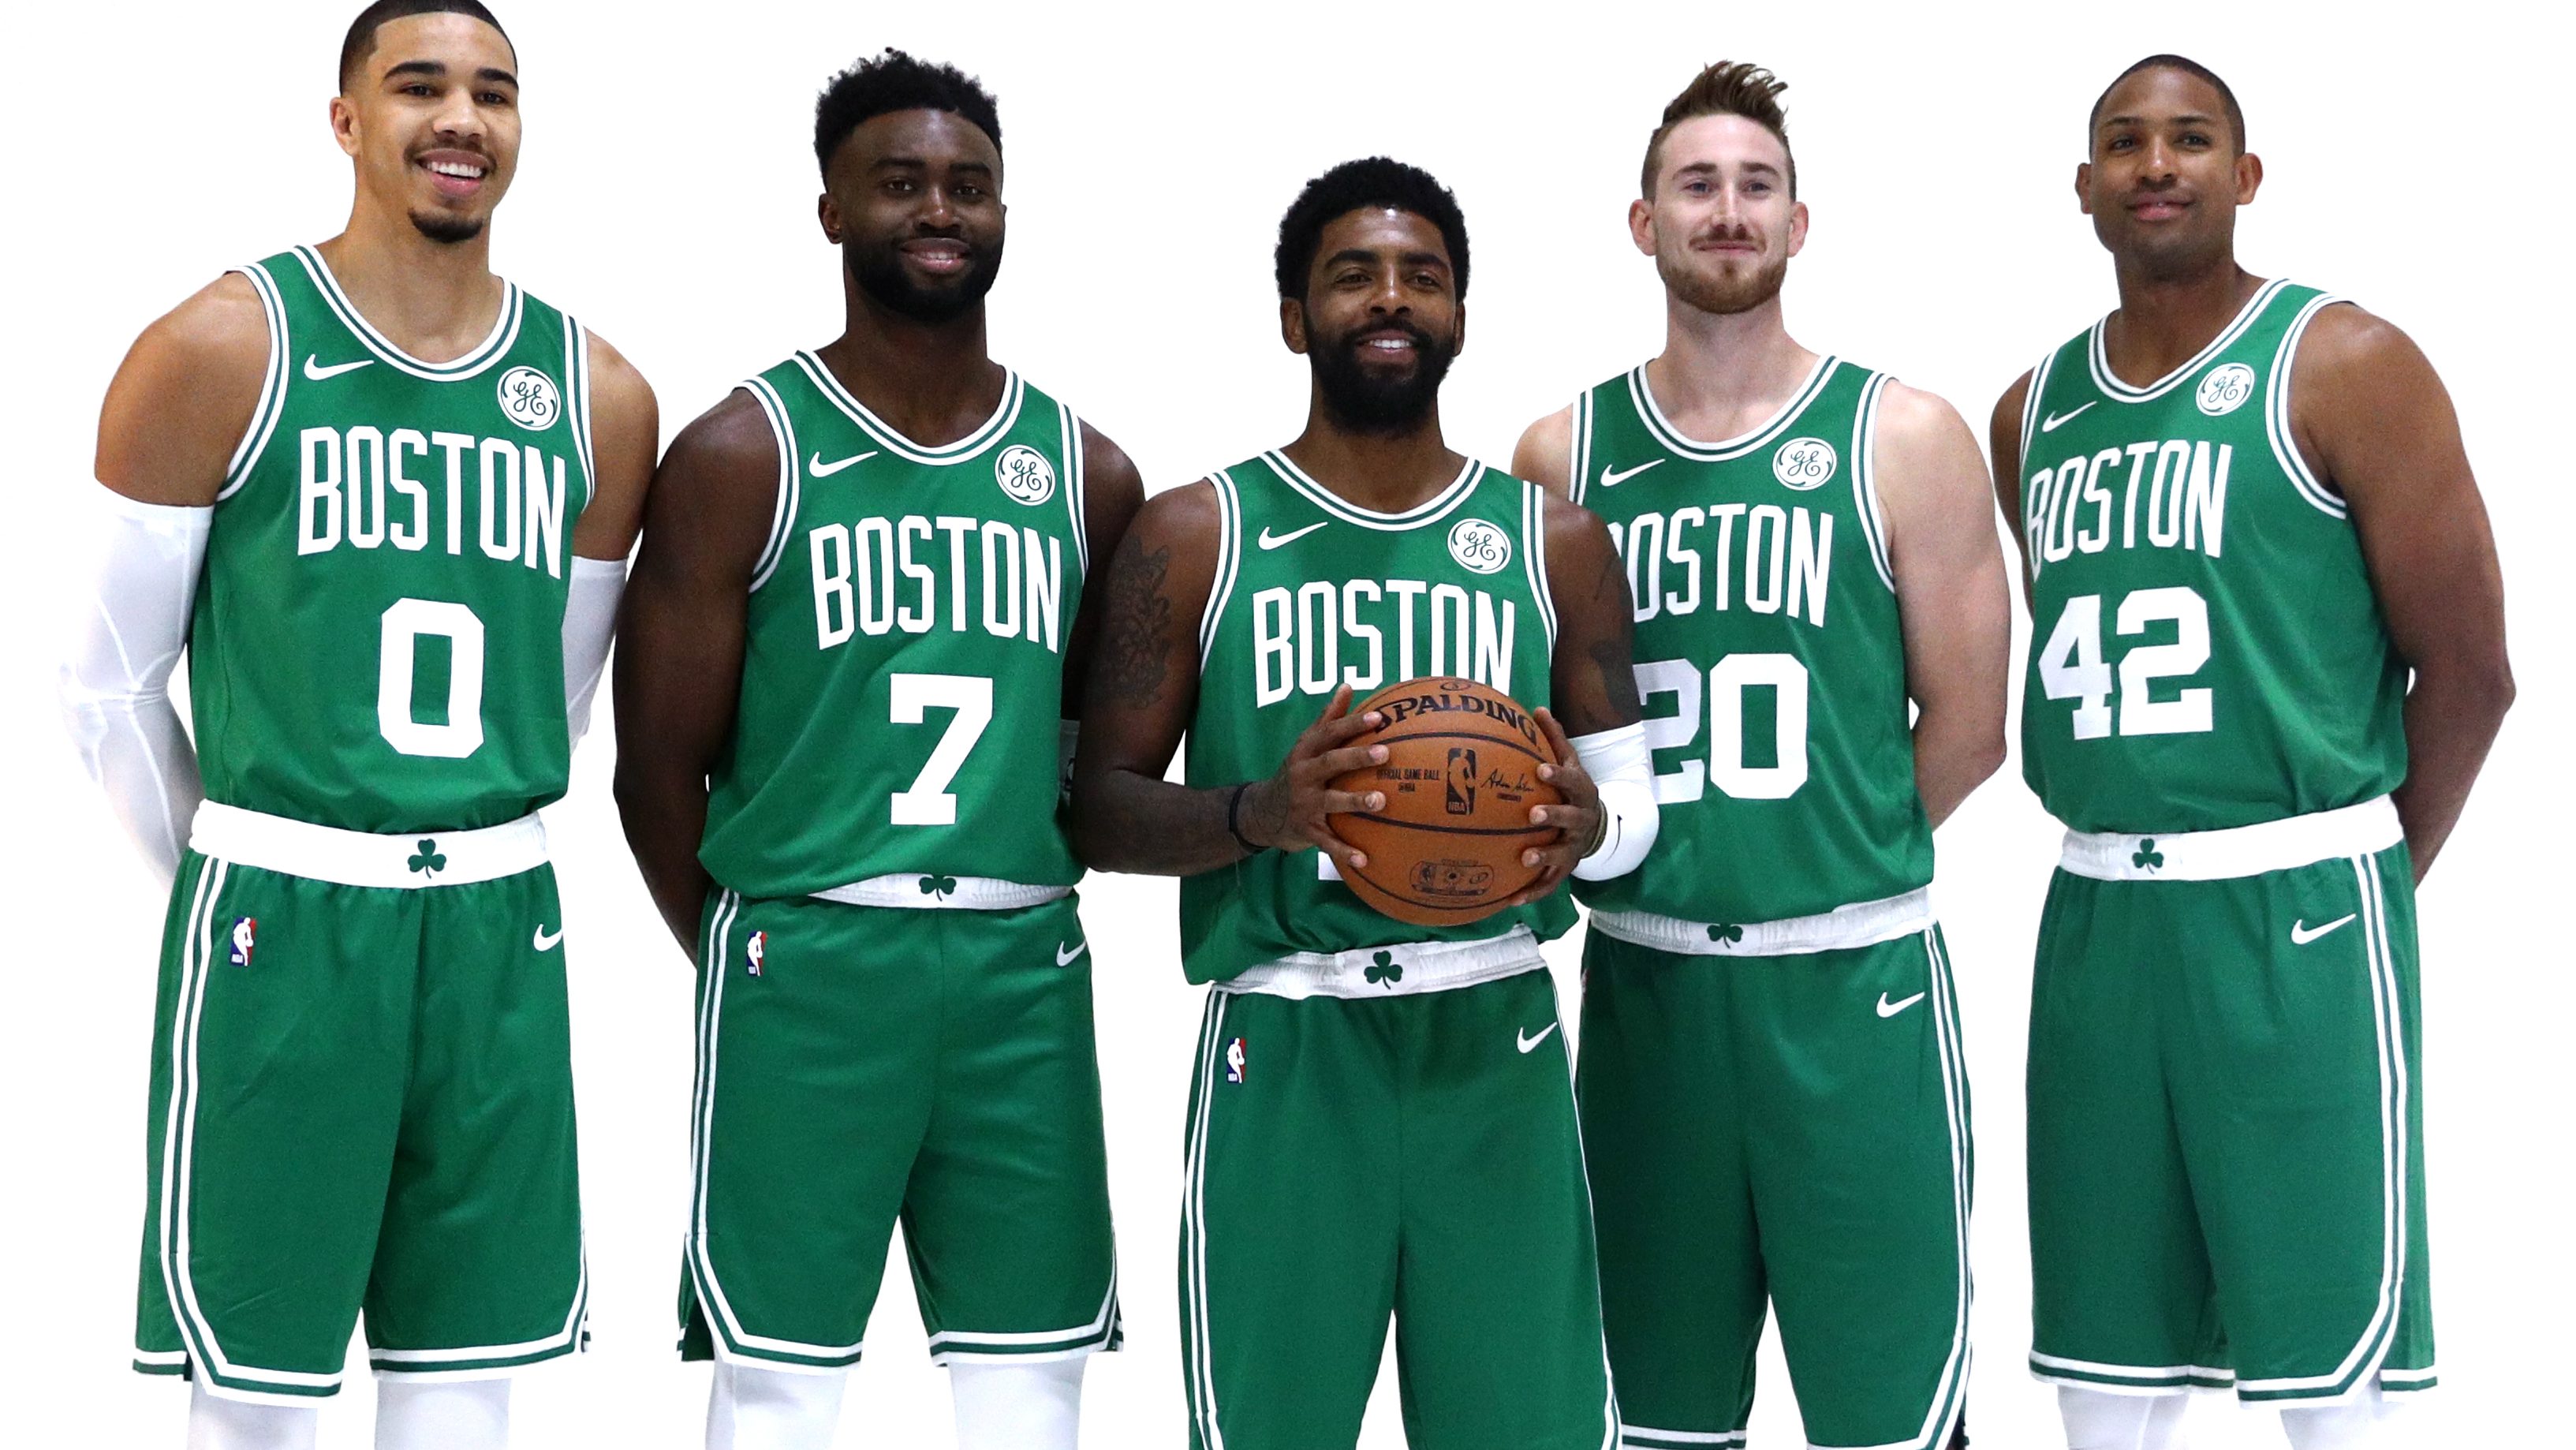 Celtics Roster & Starting Lineup for 2018